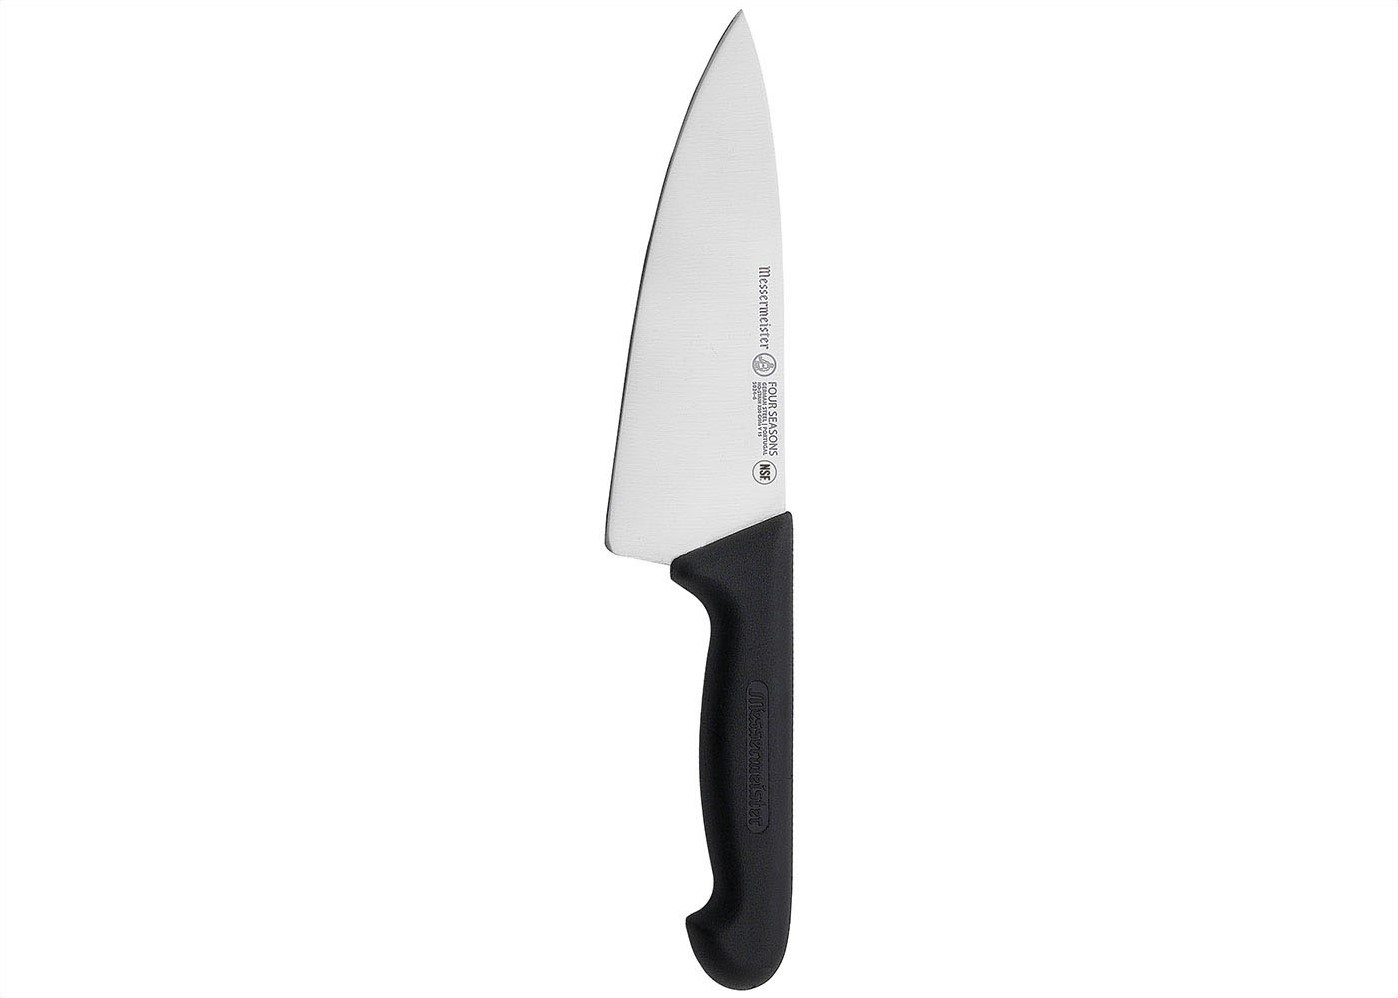 Messermeister kitchen knives